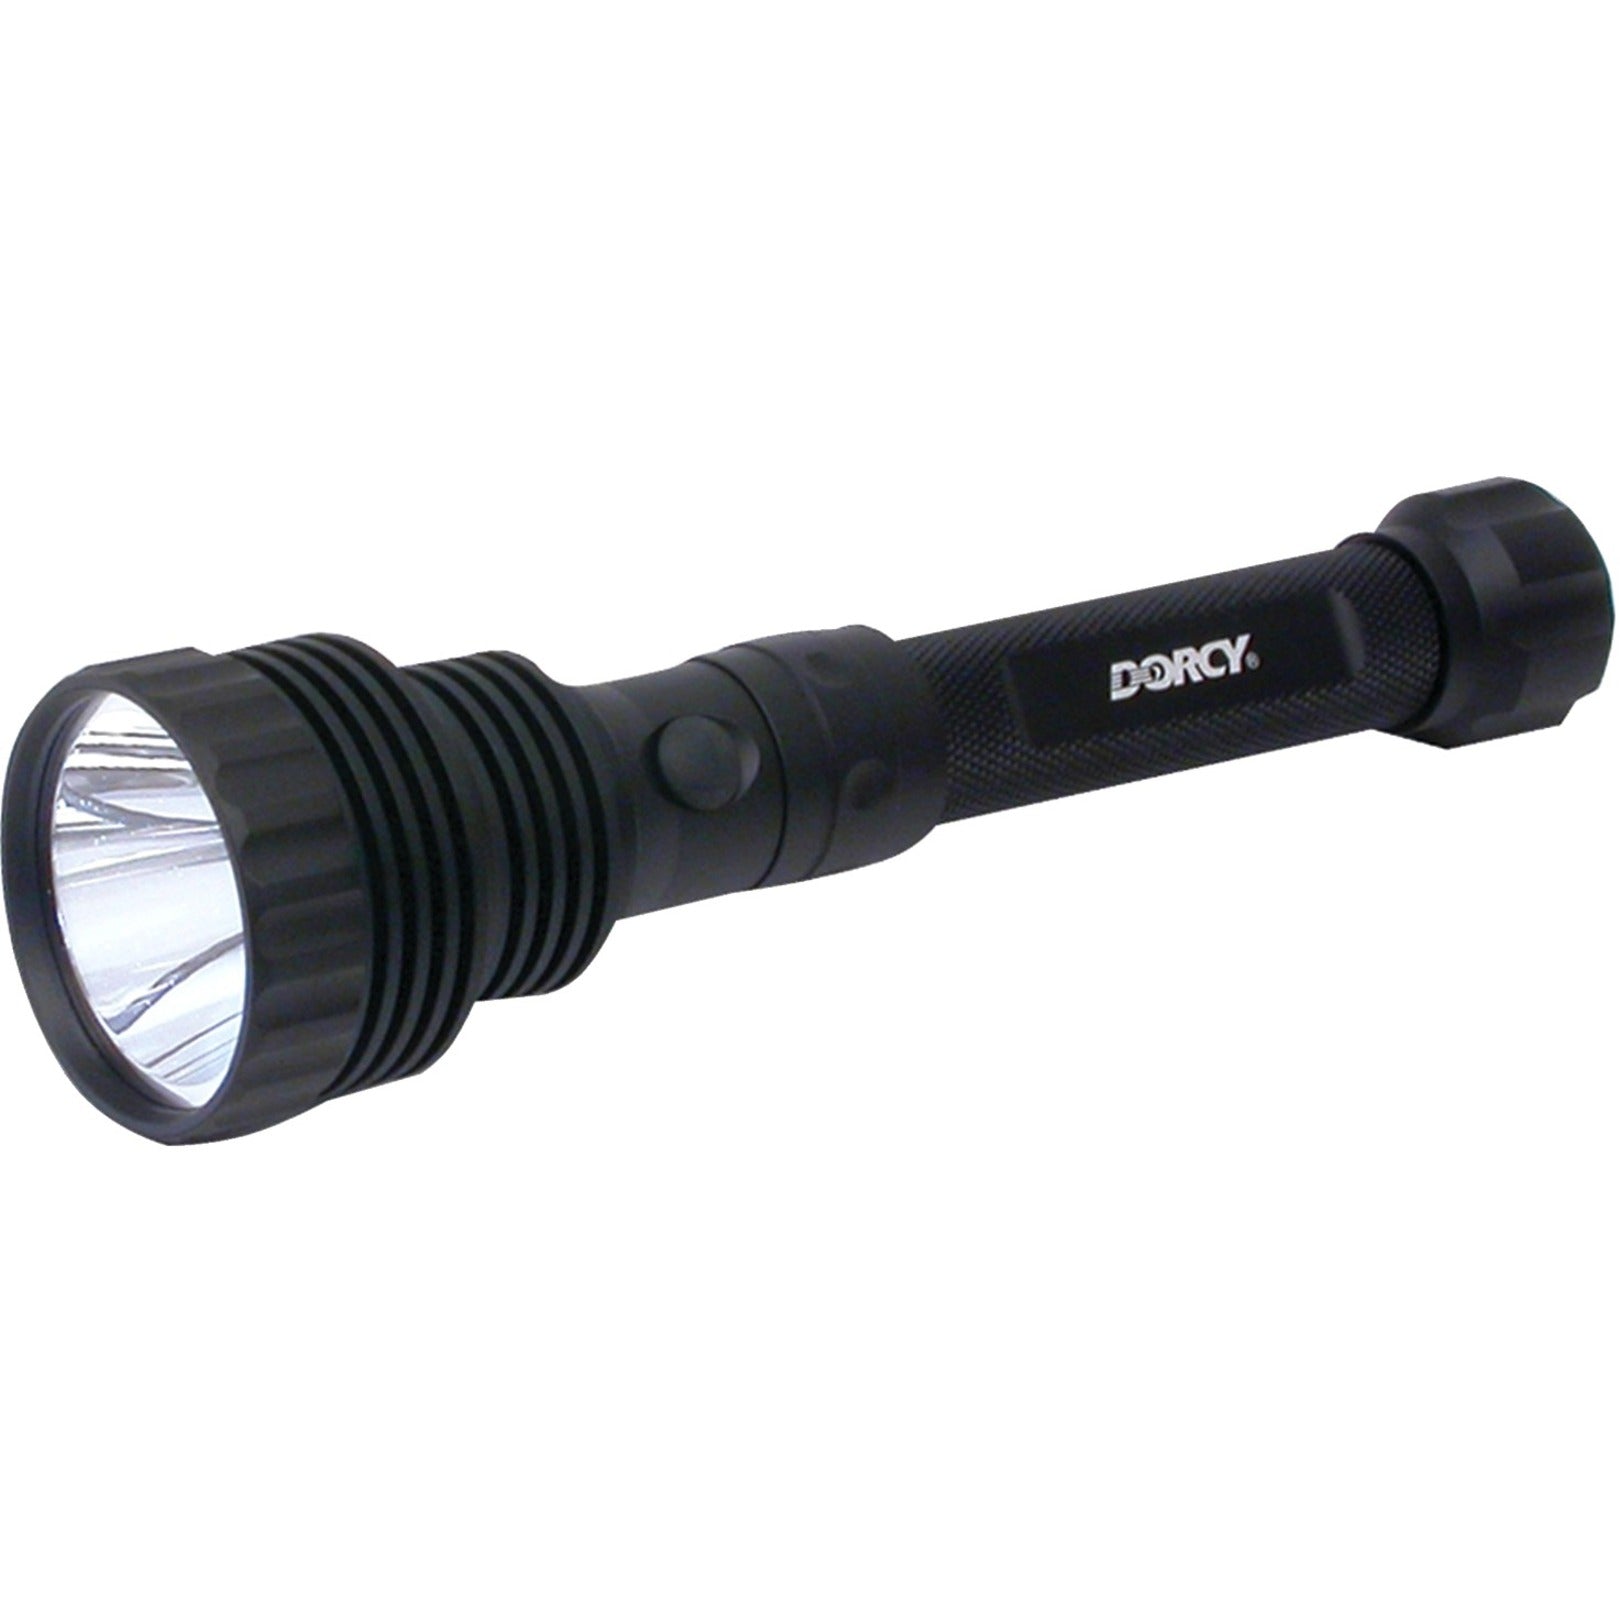 Dorcy 41-4299 Flashlight, Anodized Aluminum, Black, 220 lm, 2 Hour Battery Life